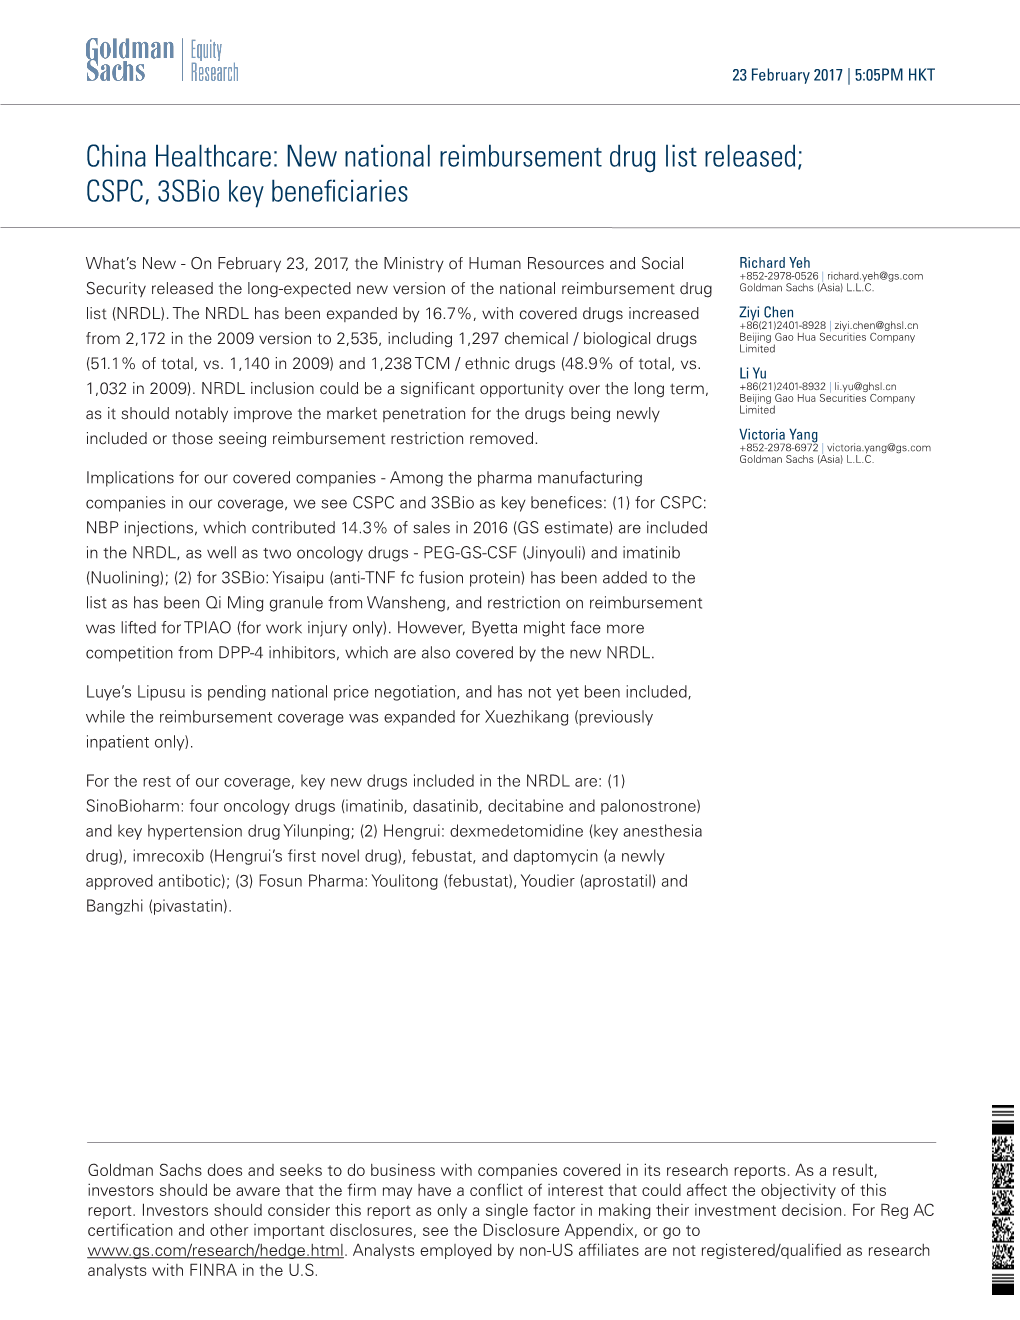 China Healthcare: New National Reimbursement Drug List Released; CSPC, 3Sbio Key Beneﬁciaries